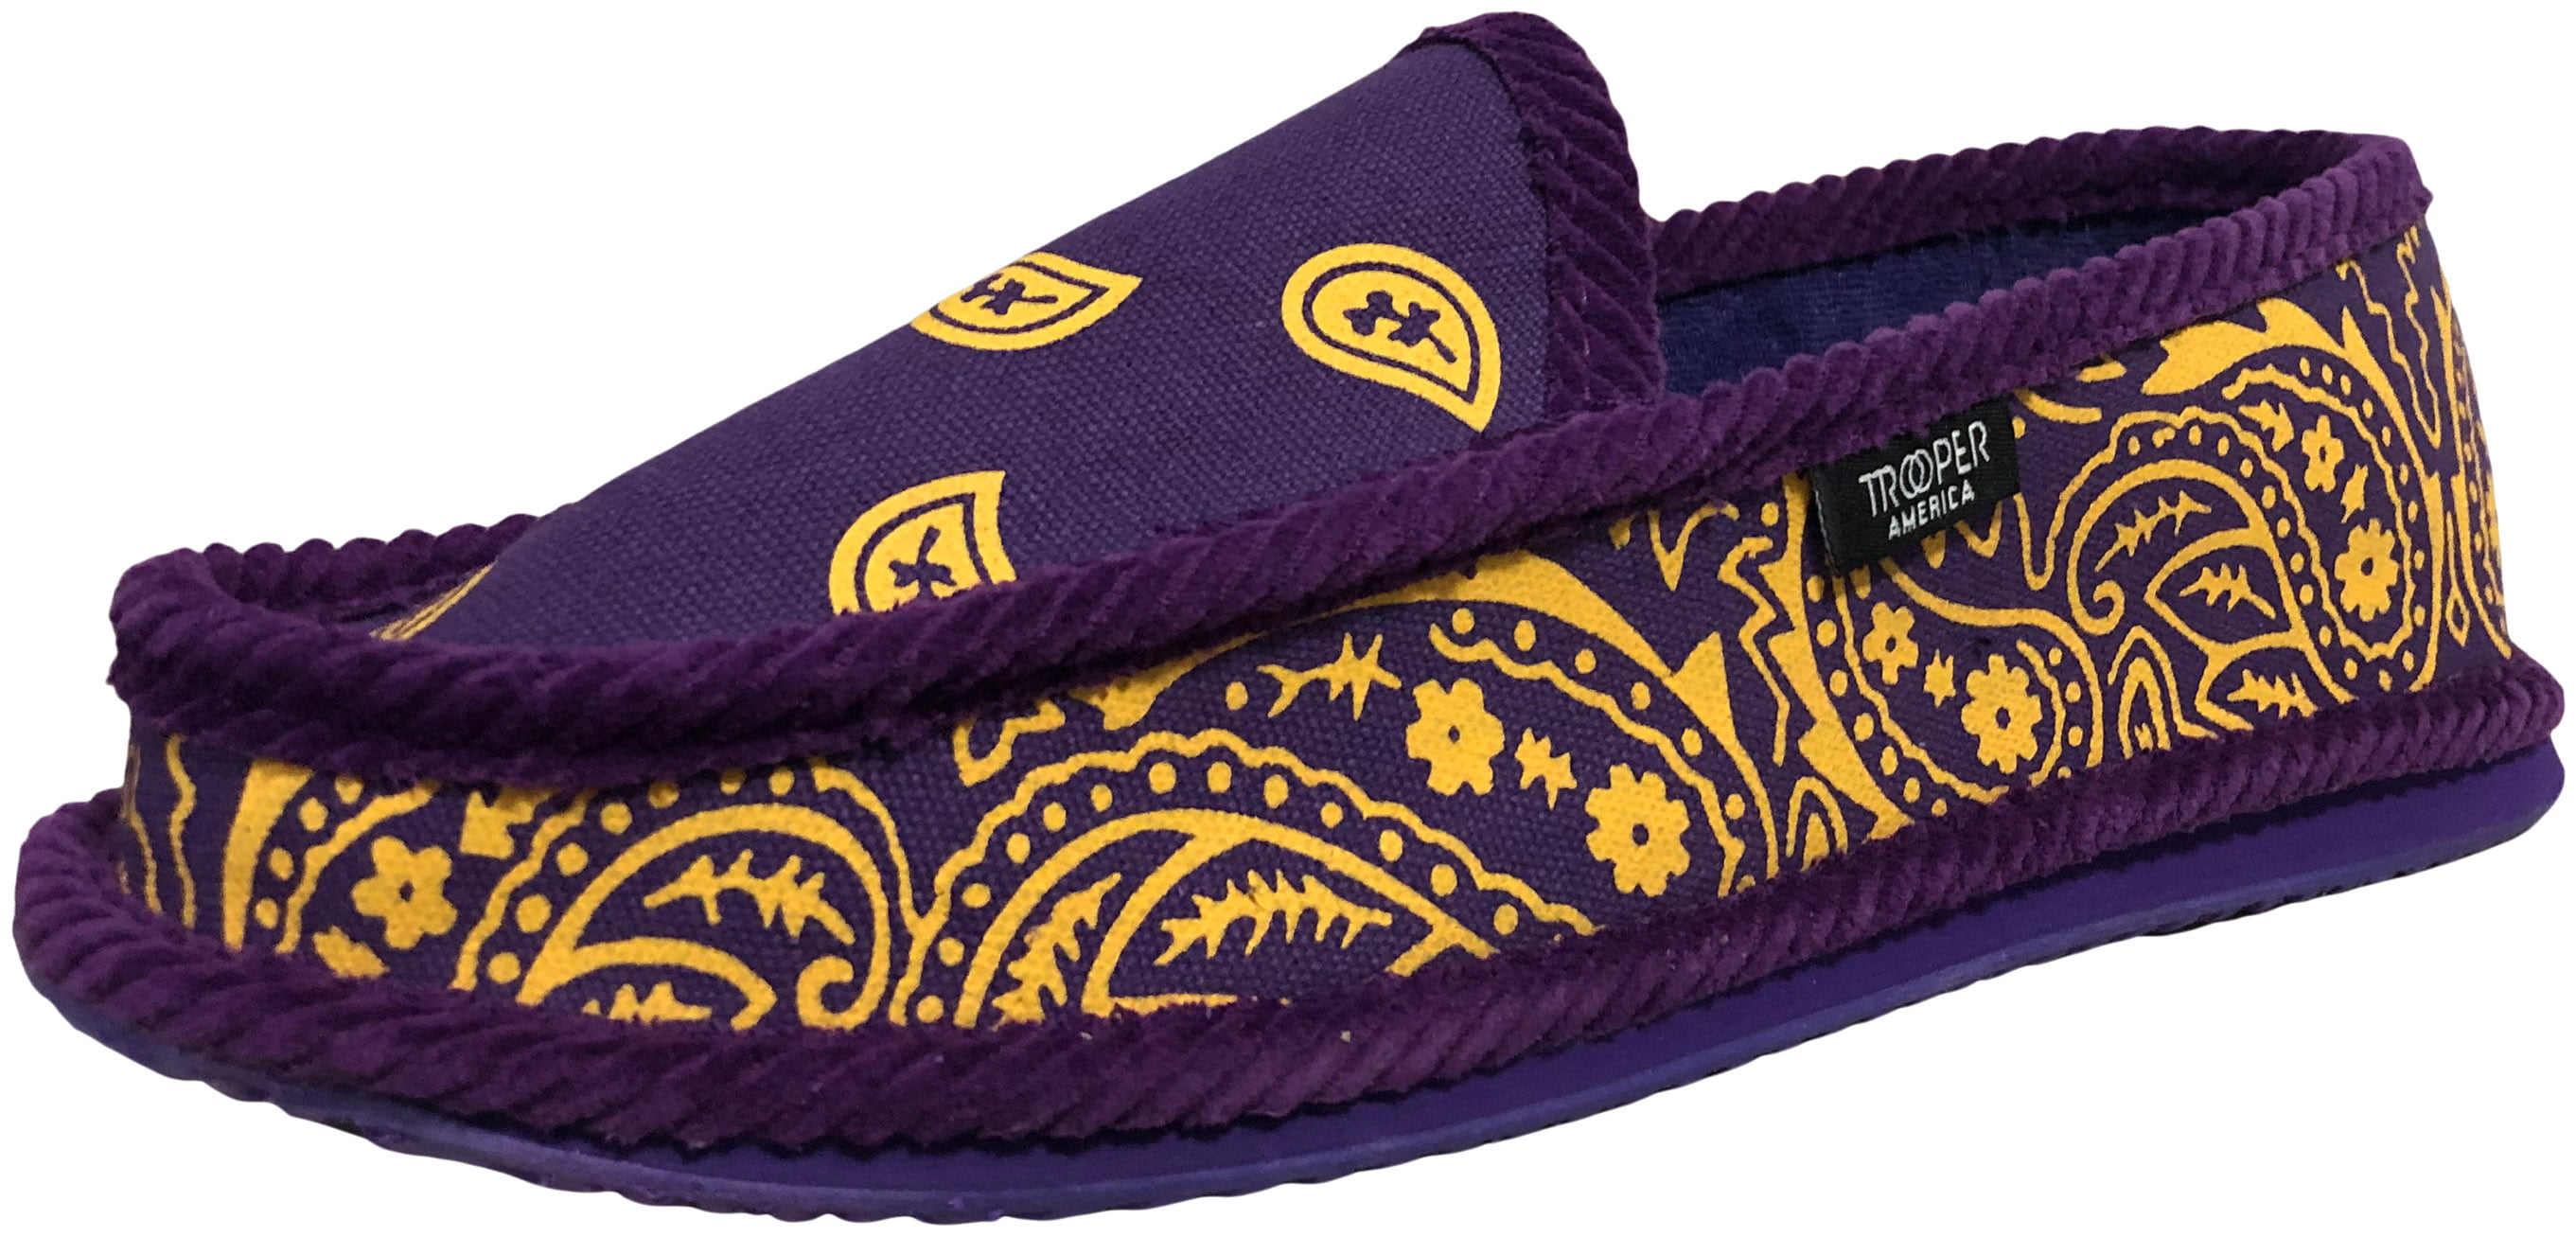 Black and Purple Bandana House Shoes Slippers Trooper Brand New 8 9 10 11 12 13 